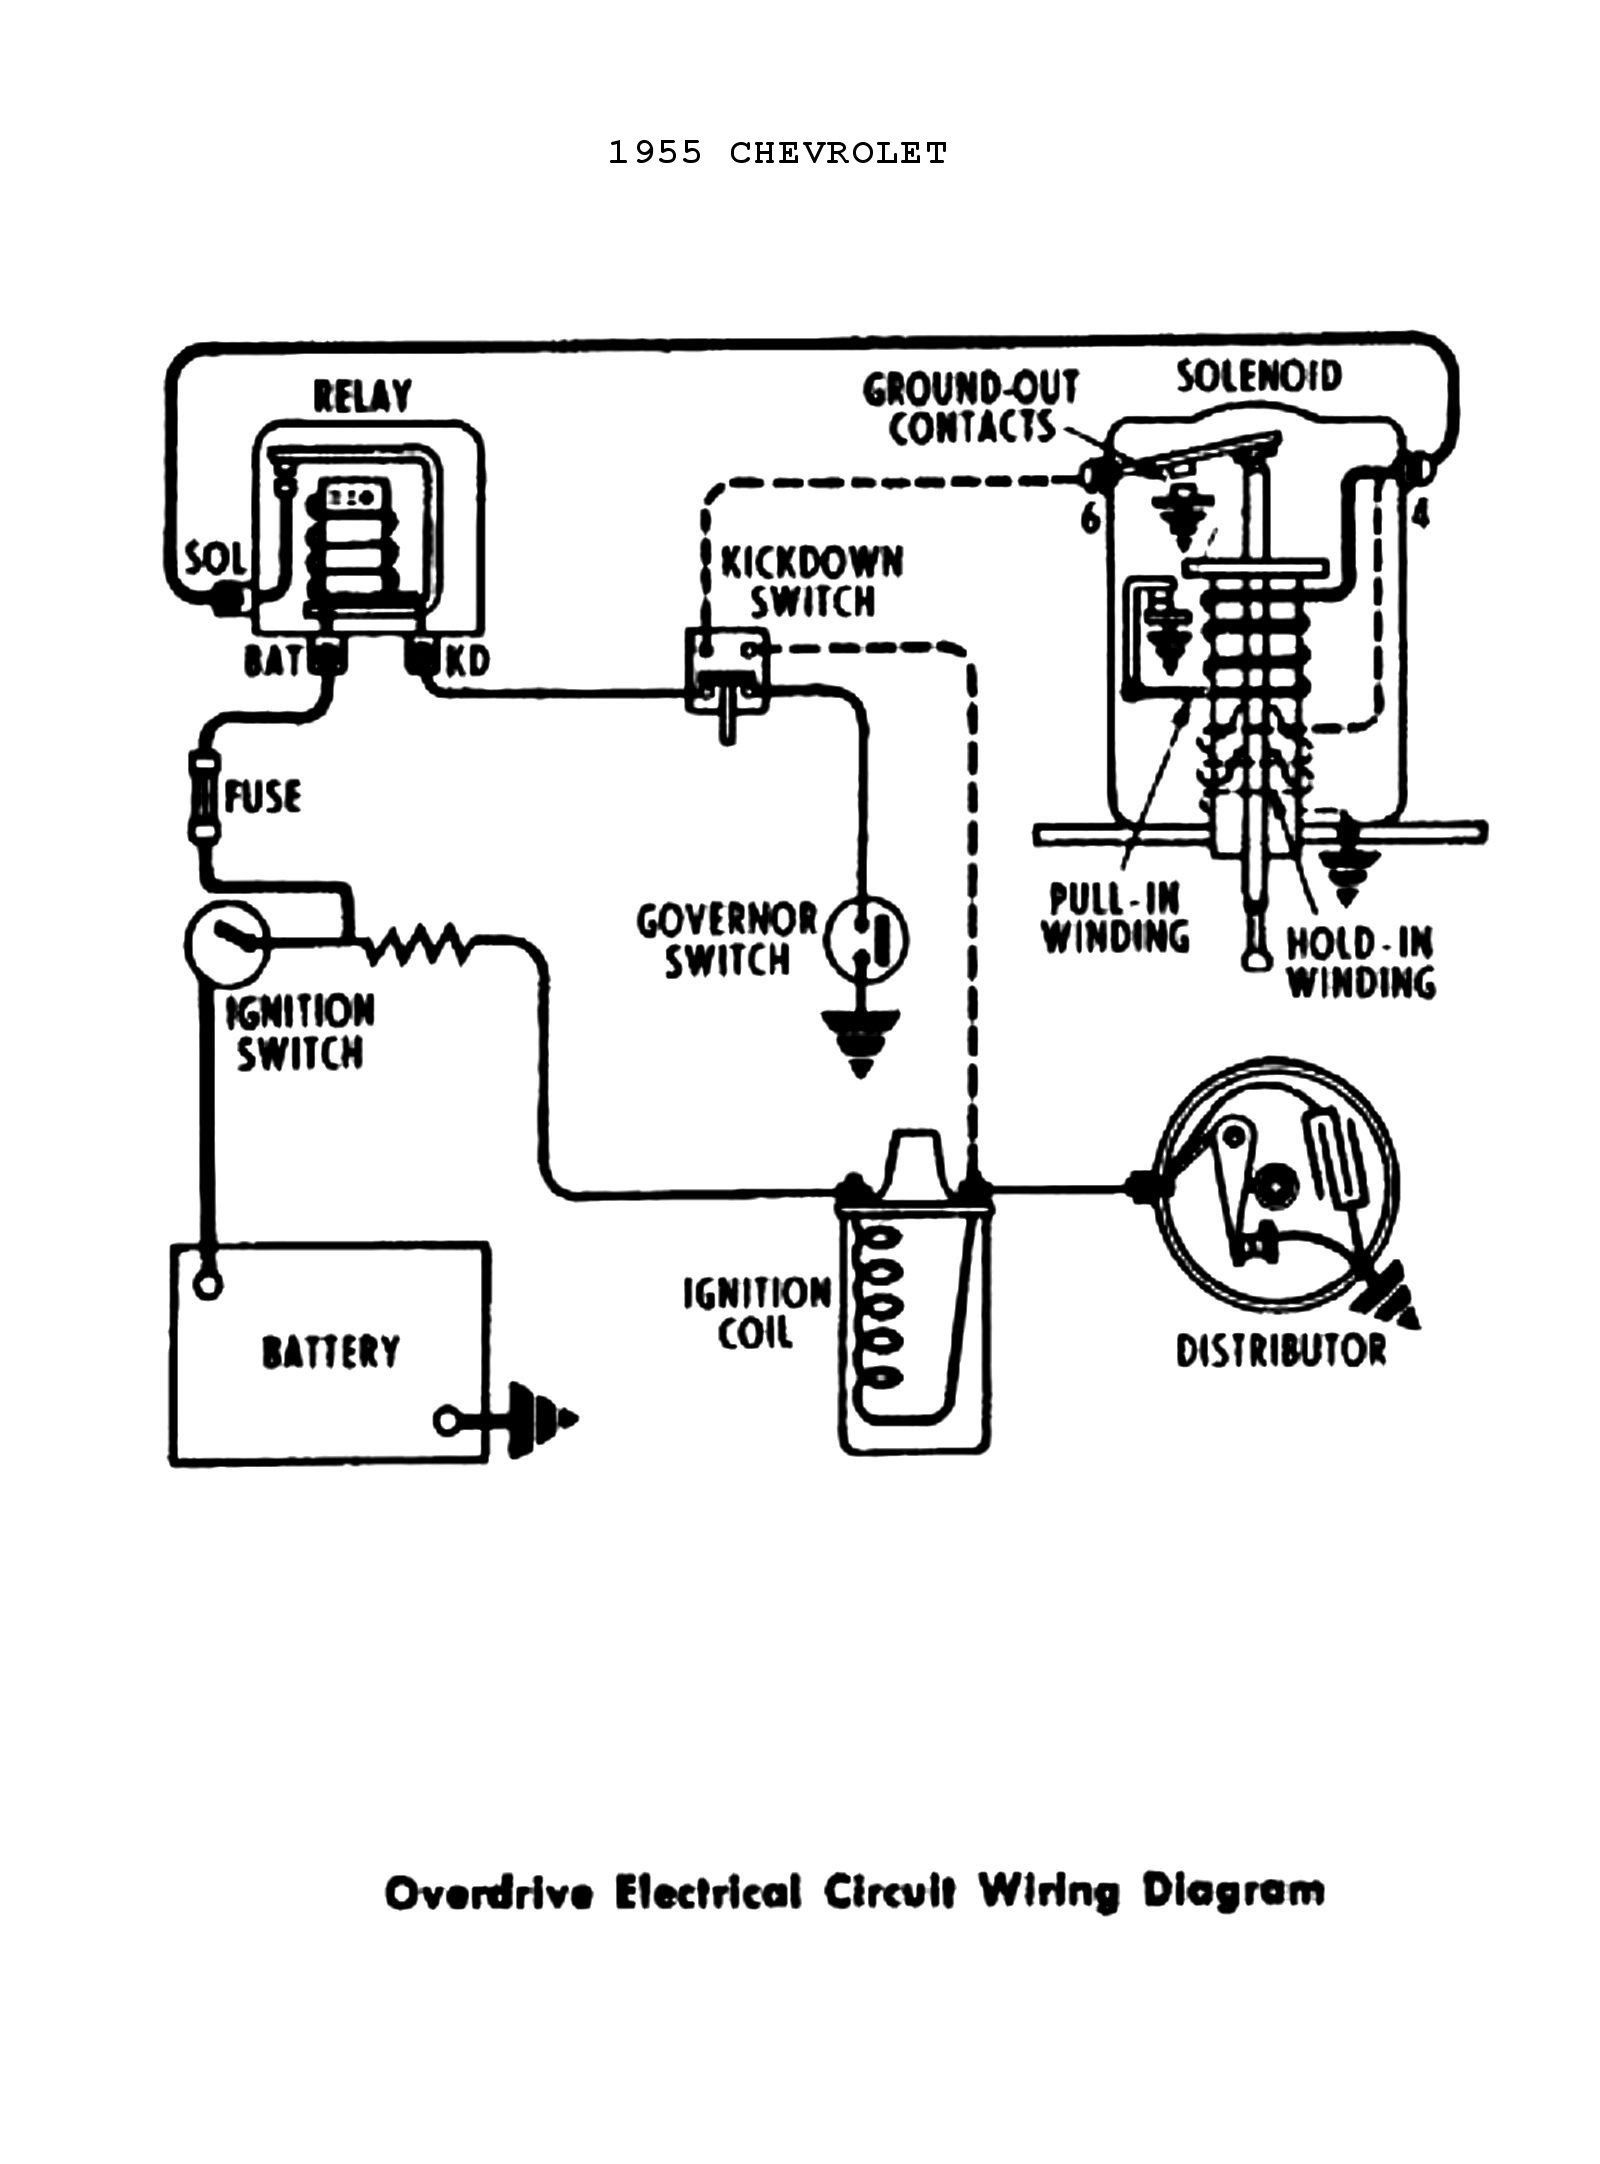 1955 Power Windows & Seats · 1955 Overdrive Circuit